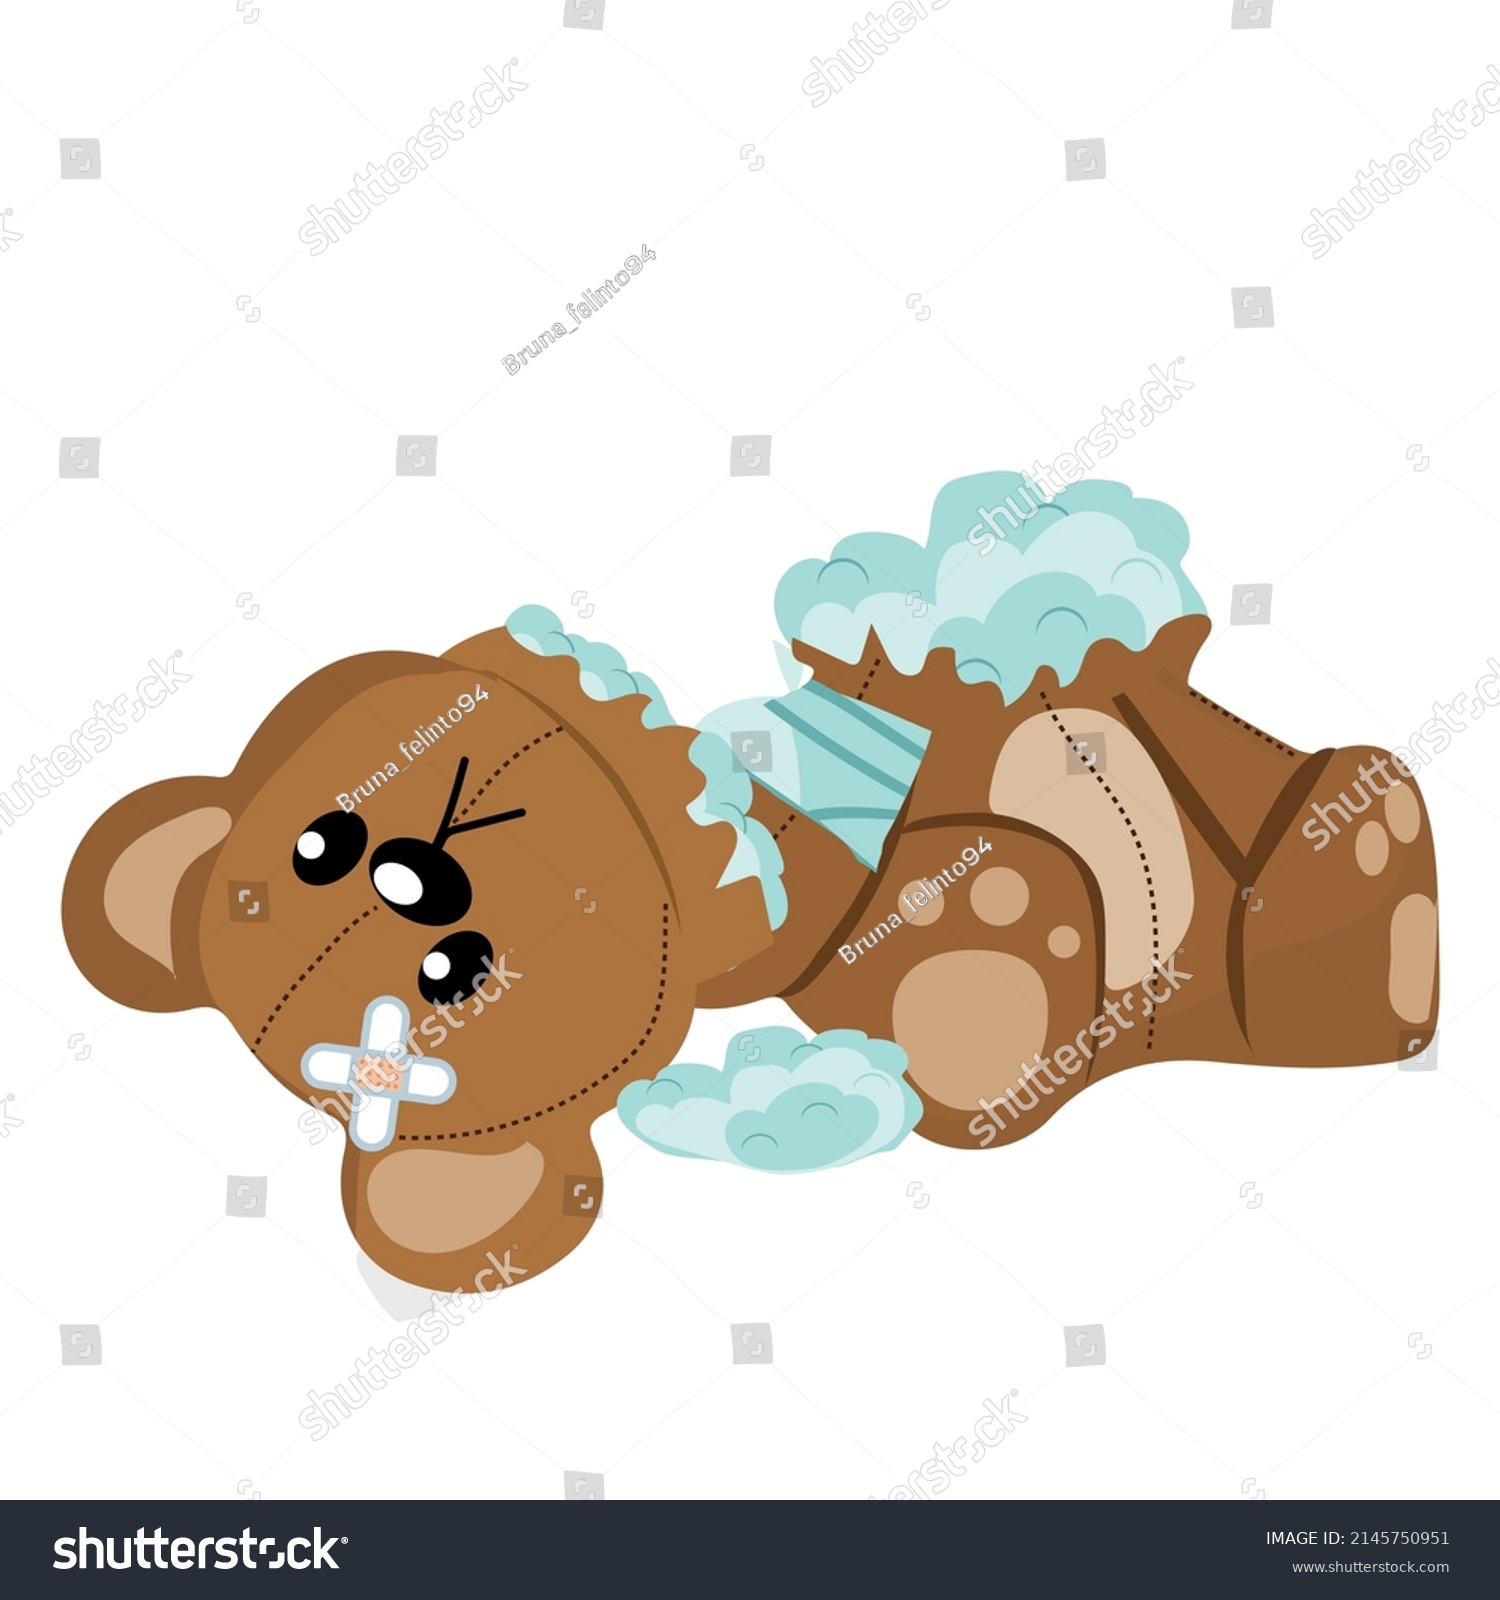 SVG of Teddy bear with torn of head, 
sad teddy bear. svg